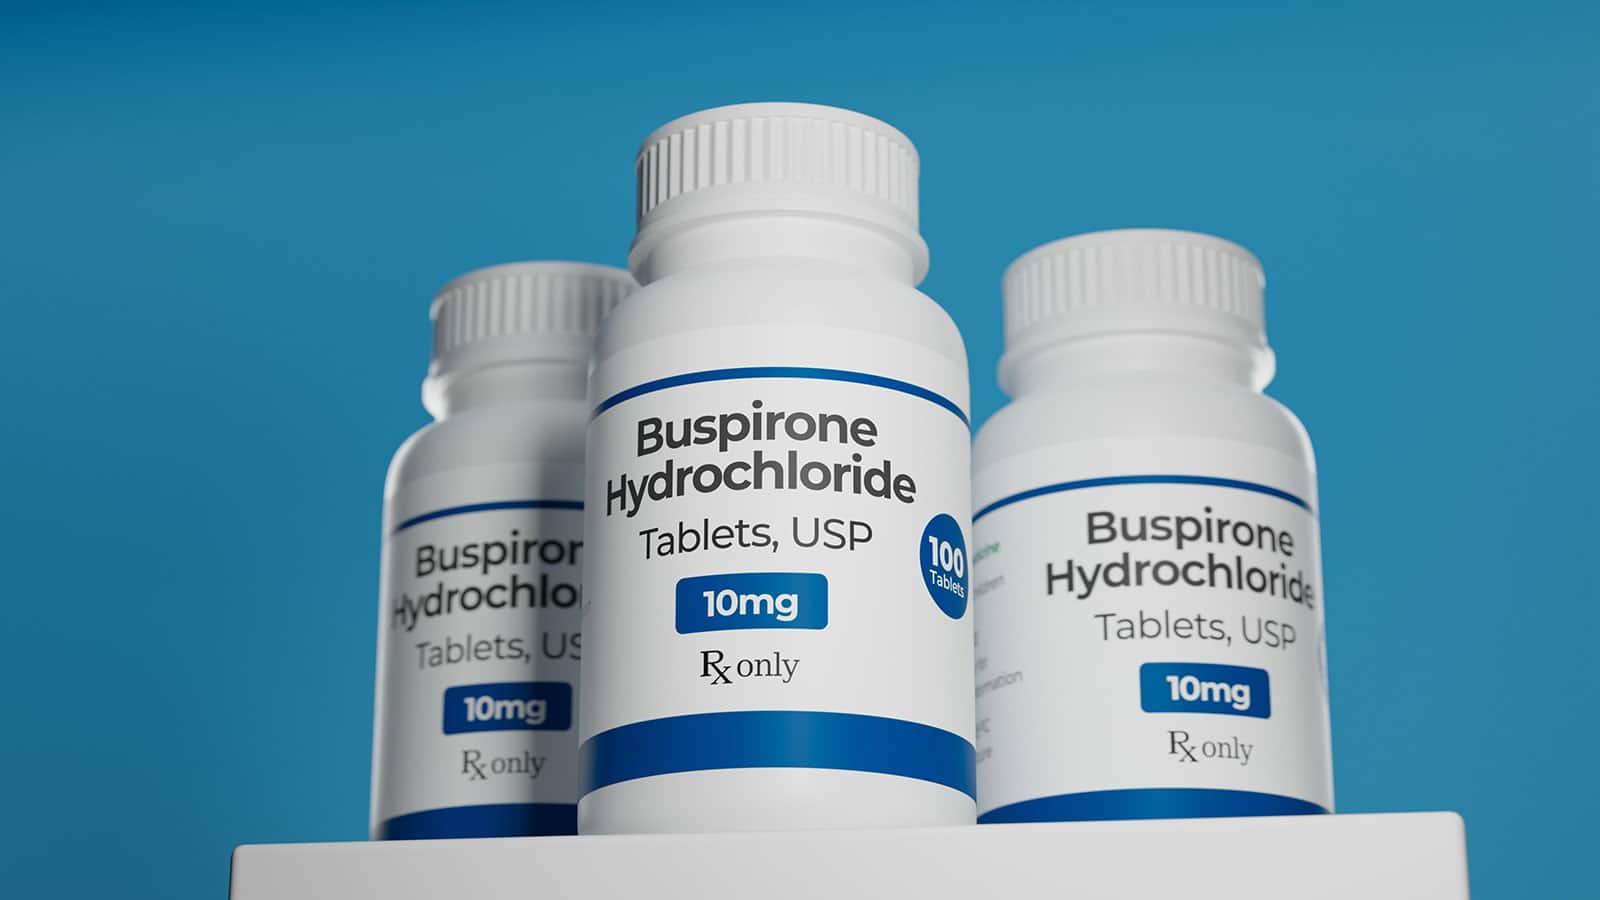 Is Buspirone Addictive?